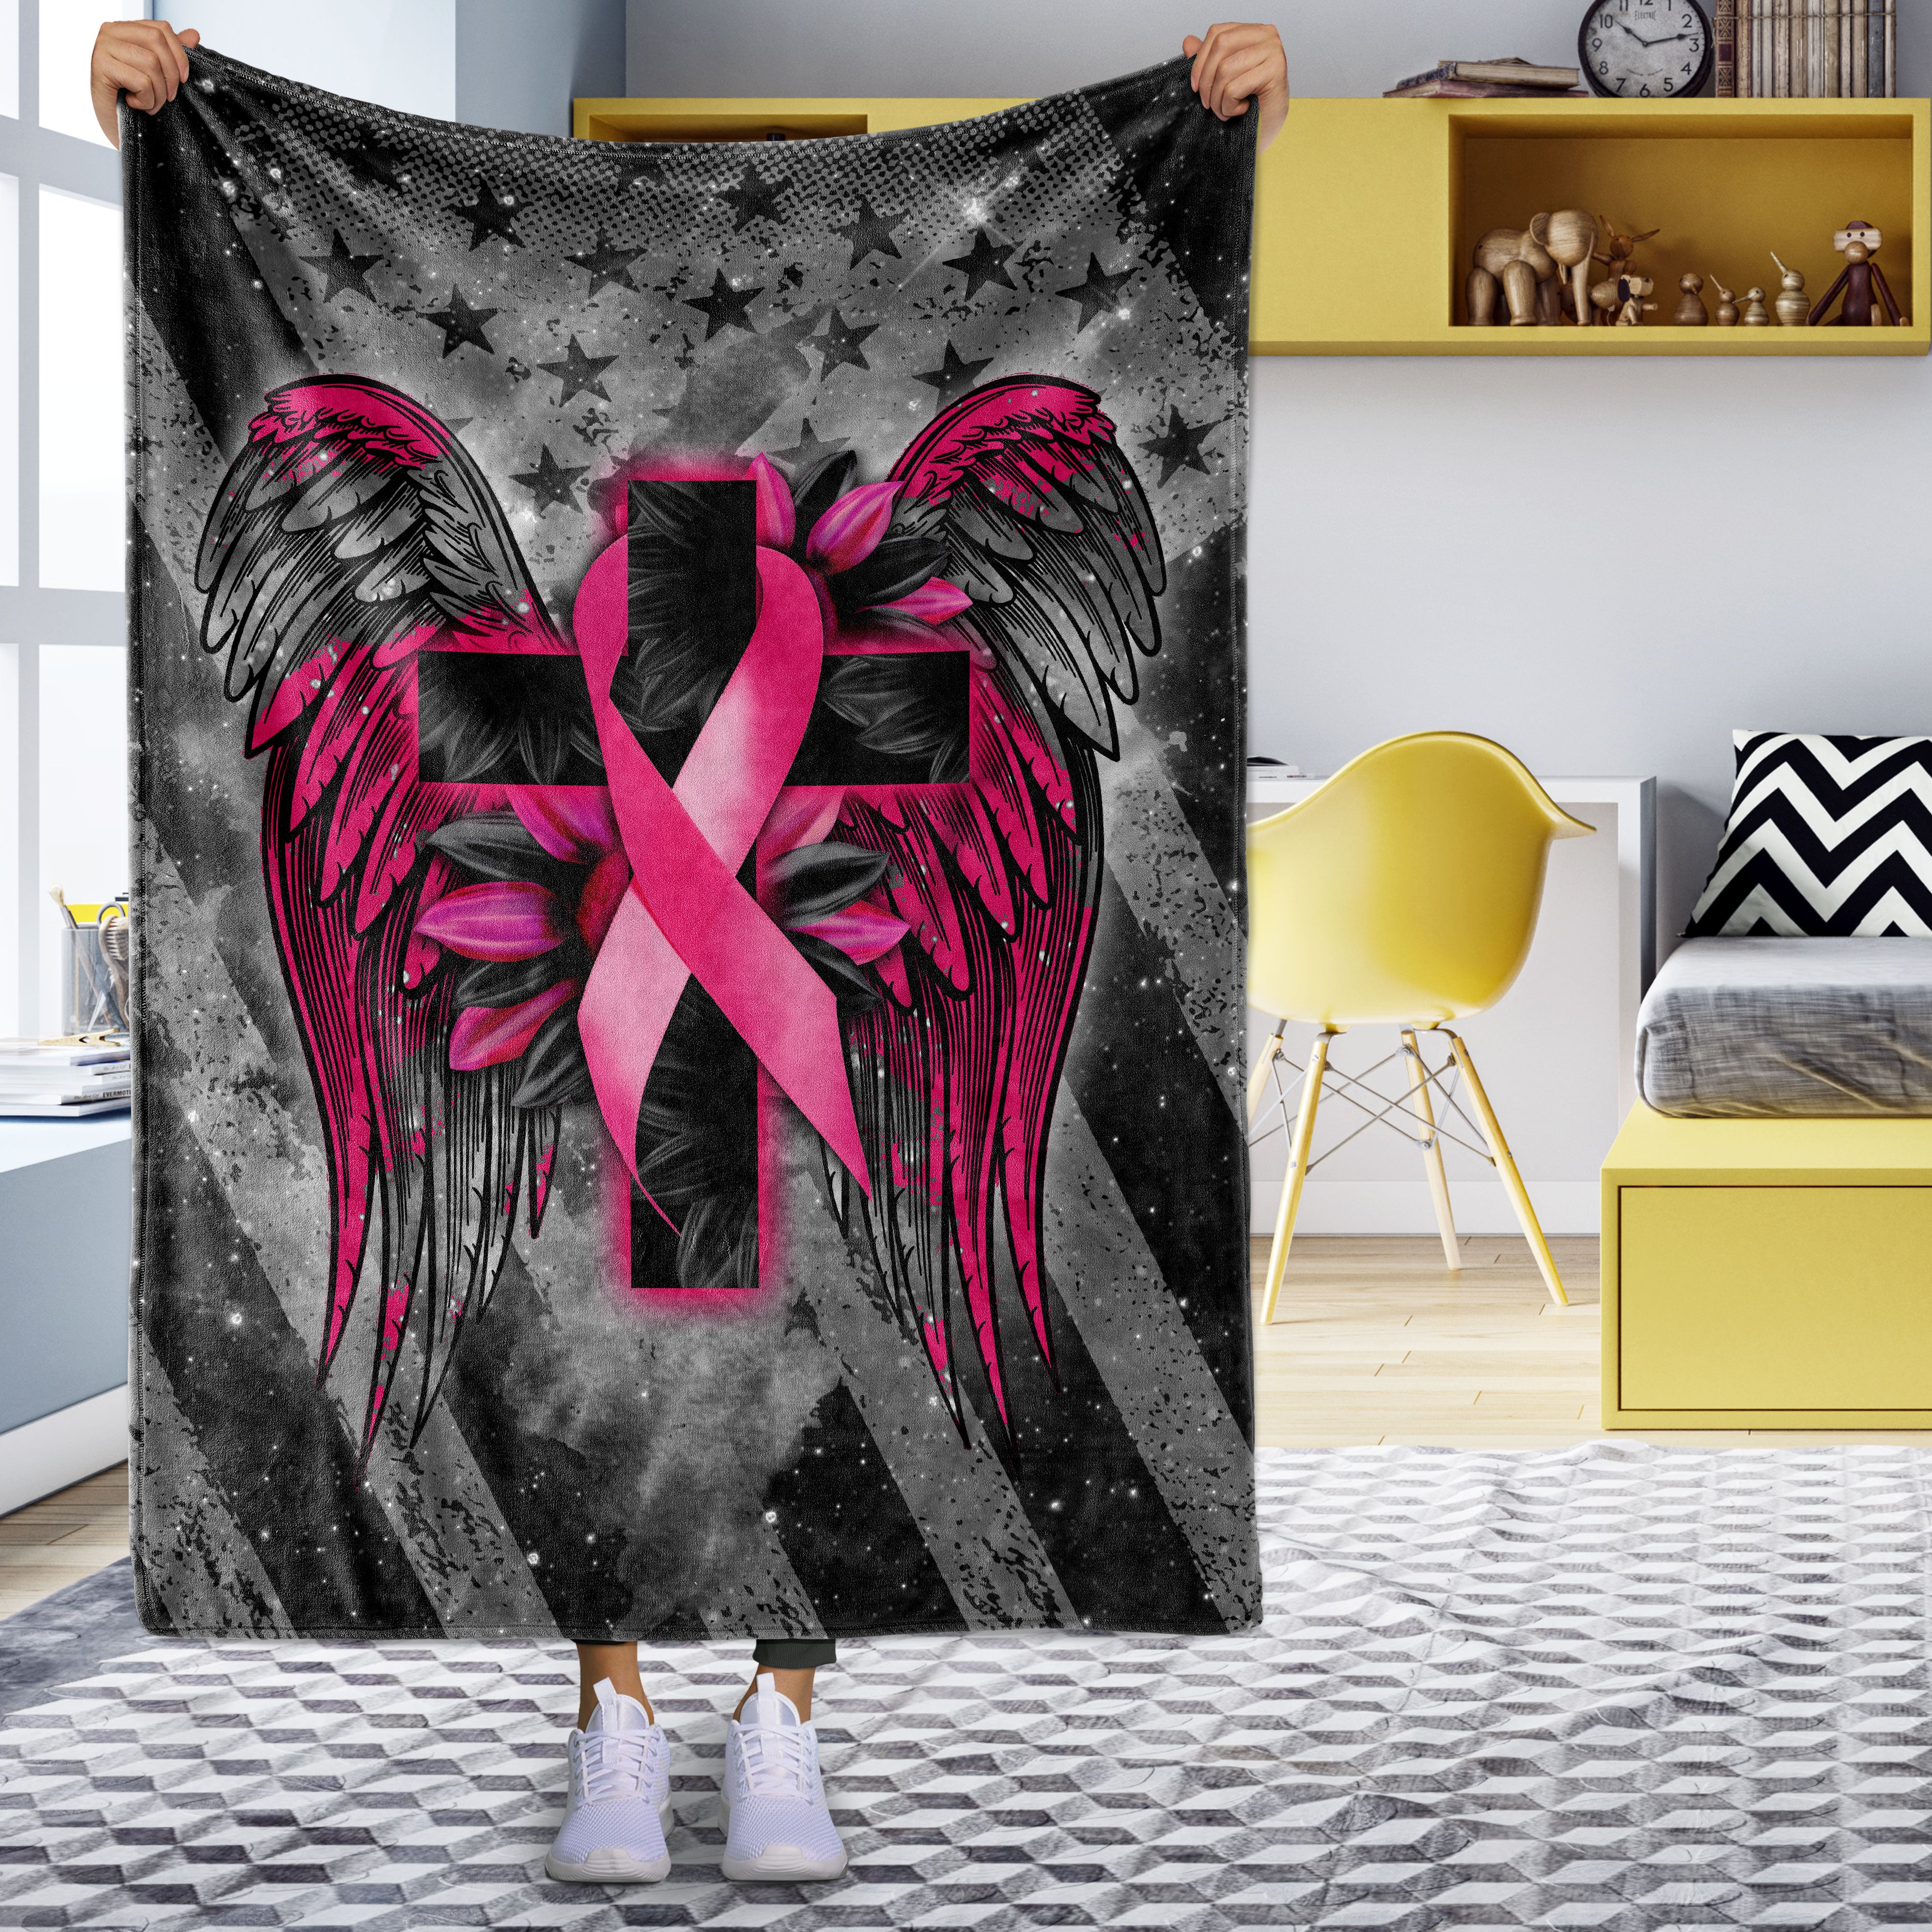 Faith Cross Wing Breast Cancer Awareness Blanket - Lath0103214Ki